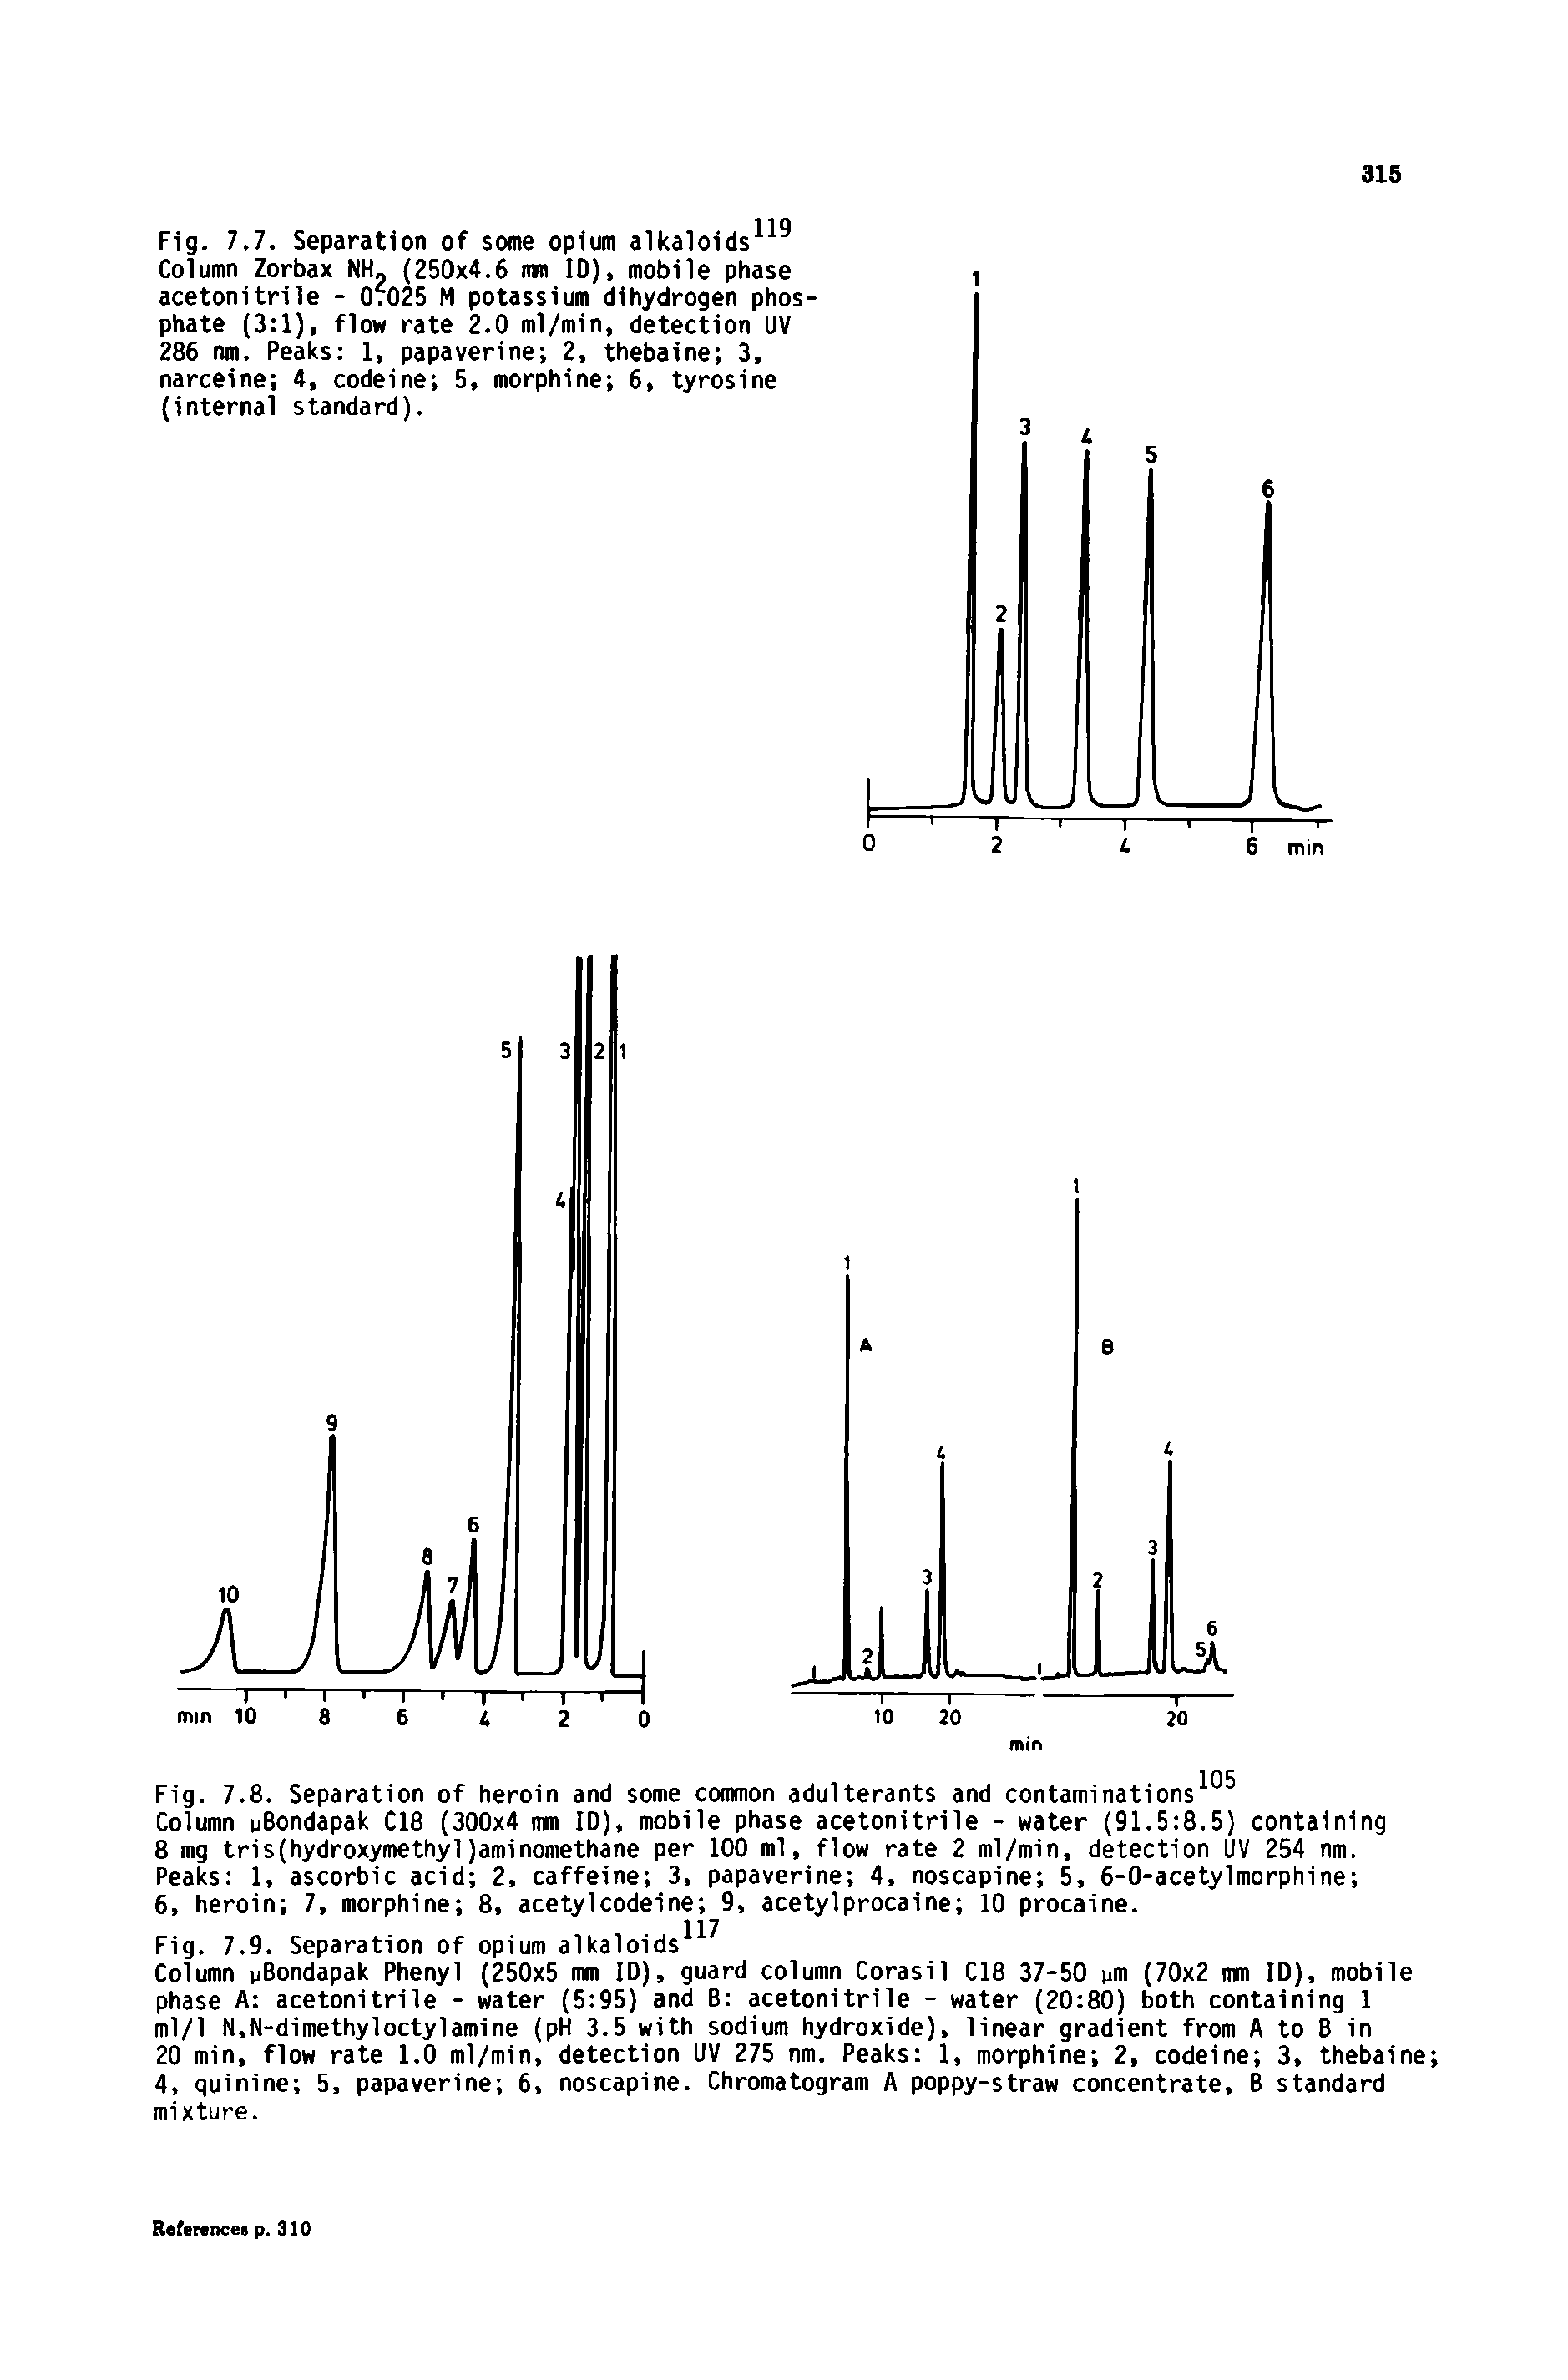 Fig. 7.7. Separation of some opium alkaloids Column Zorbax NH (250x4.6 mm ID), mobile phase acetonitrile - 07025 M potassium dihydrogen phosphate (3 1), flow rate 2.0 ml/min, detection UV 286 nm. Peaks 1, papaverine 2, thebaine 3, narceine 4, codeine 5, morphine 6, tyrosine (internal standard).